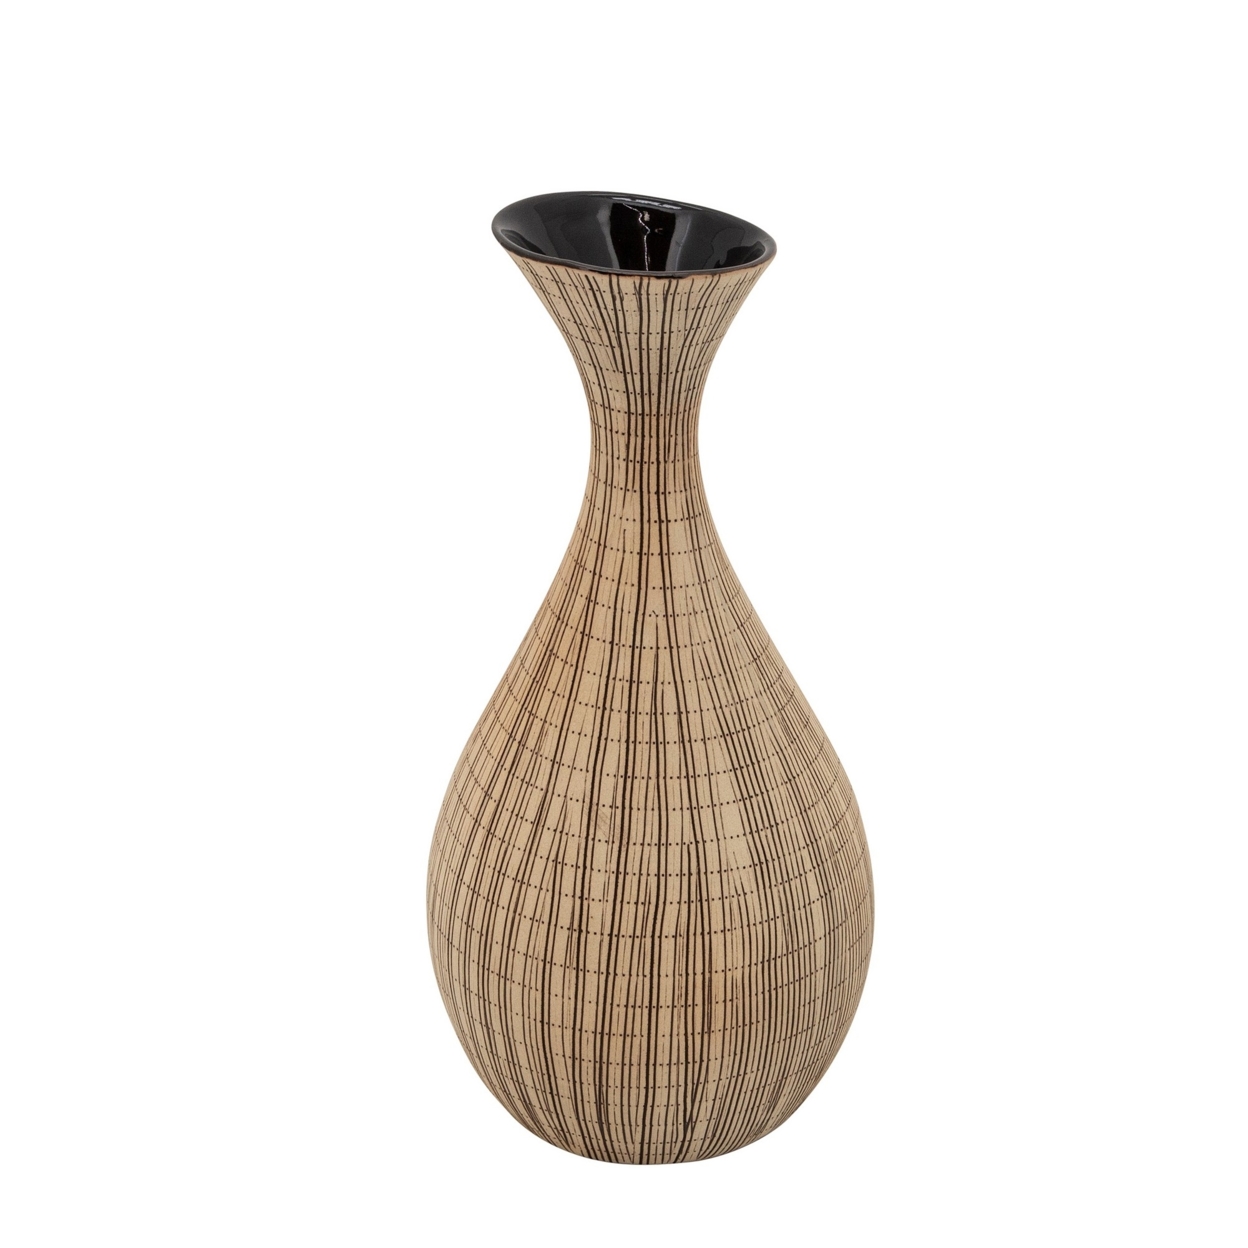 Pot Bellied Shape Ceramic Vase With Sleek Flared Neck, Beige- Saltoro Sherpi